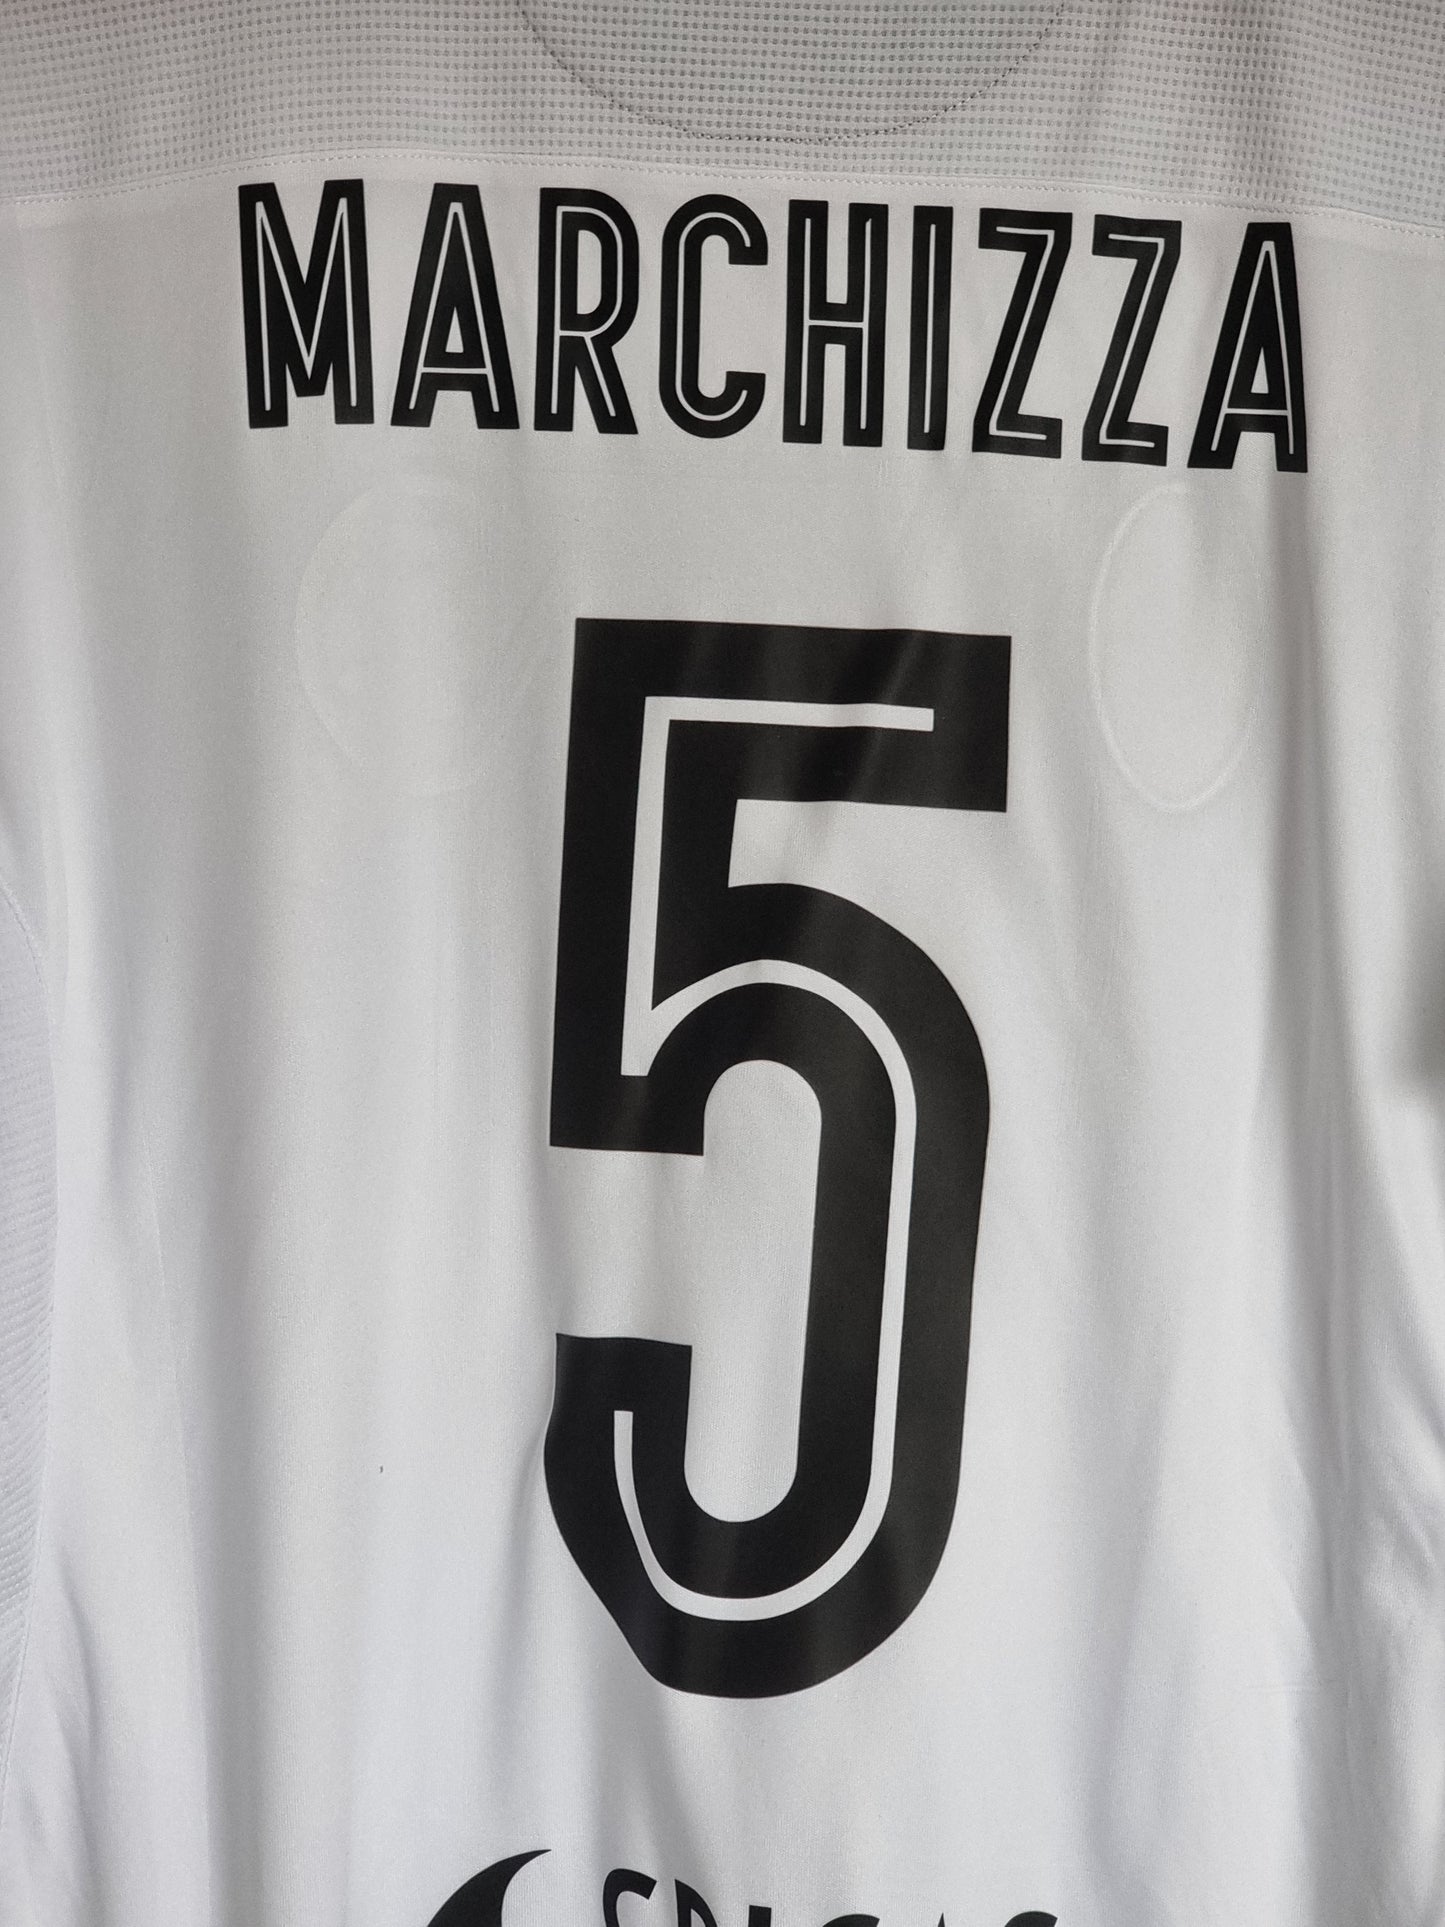 Acerbis Spezia 19/20 'Marchizza 5' Match Issue Home Shirt Large